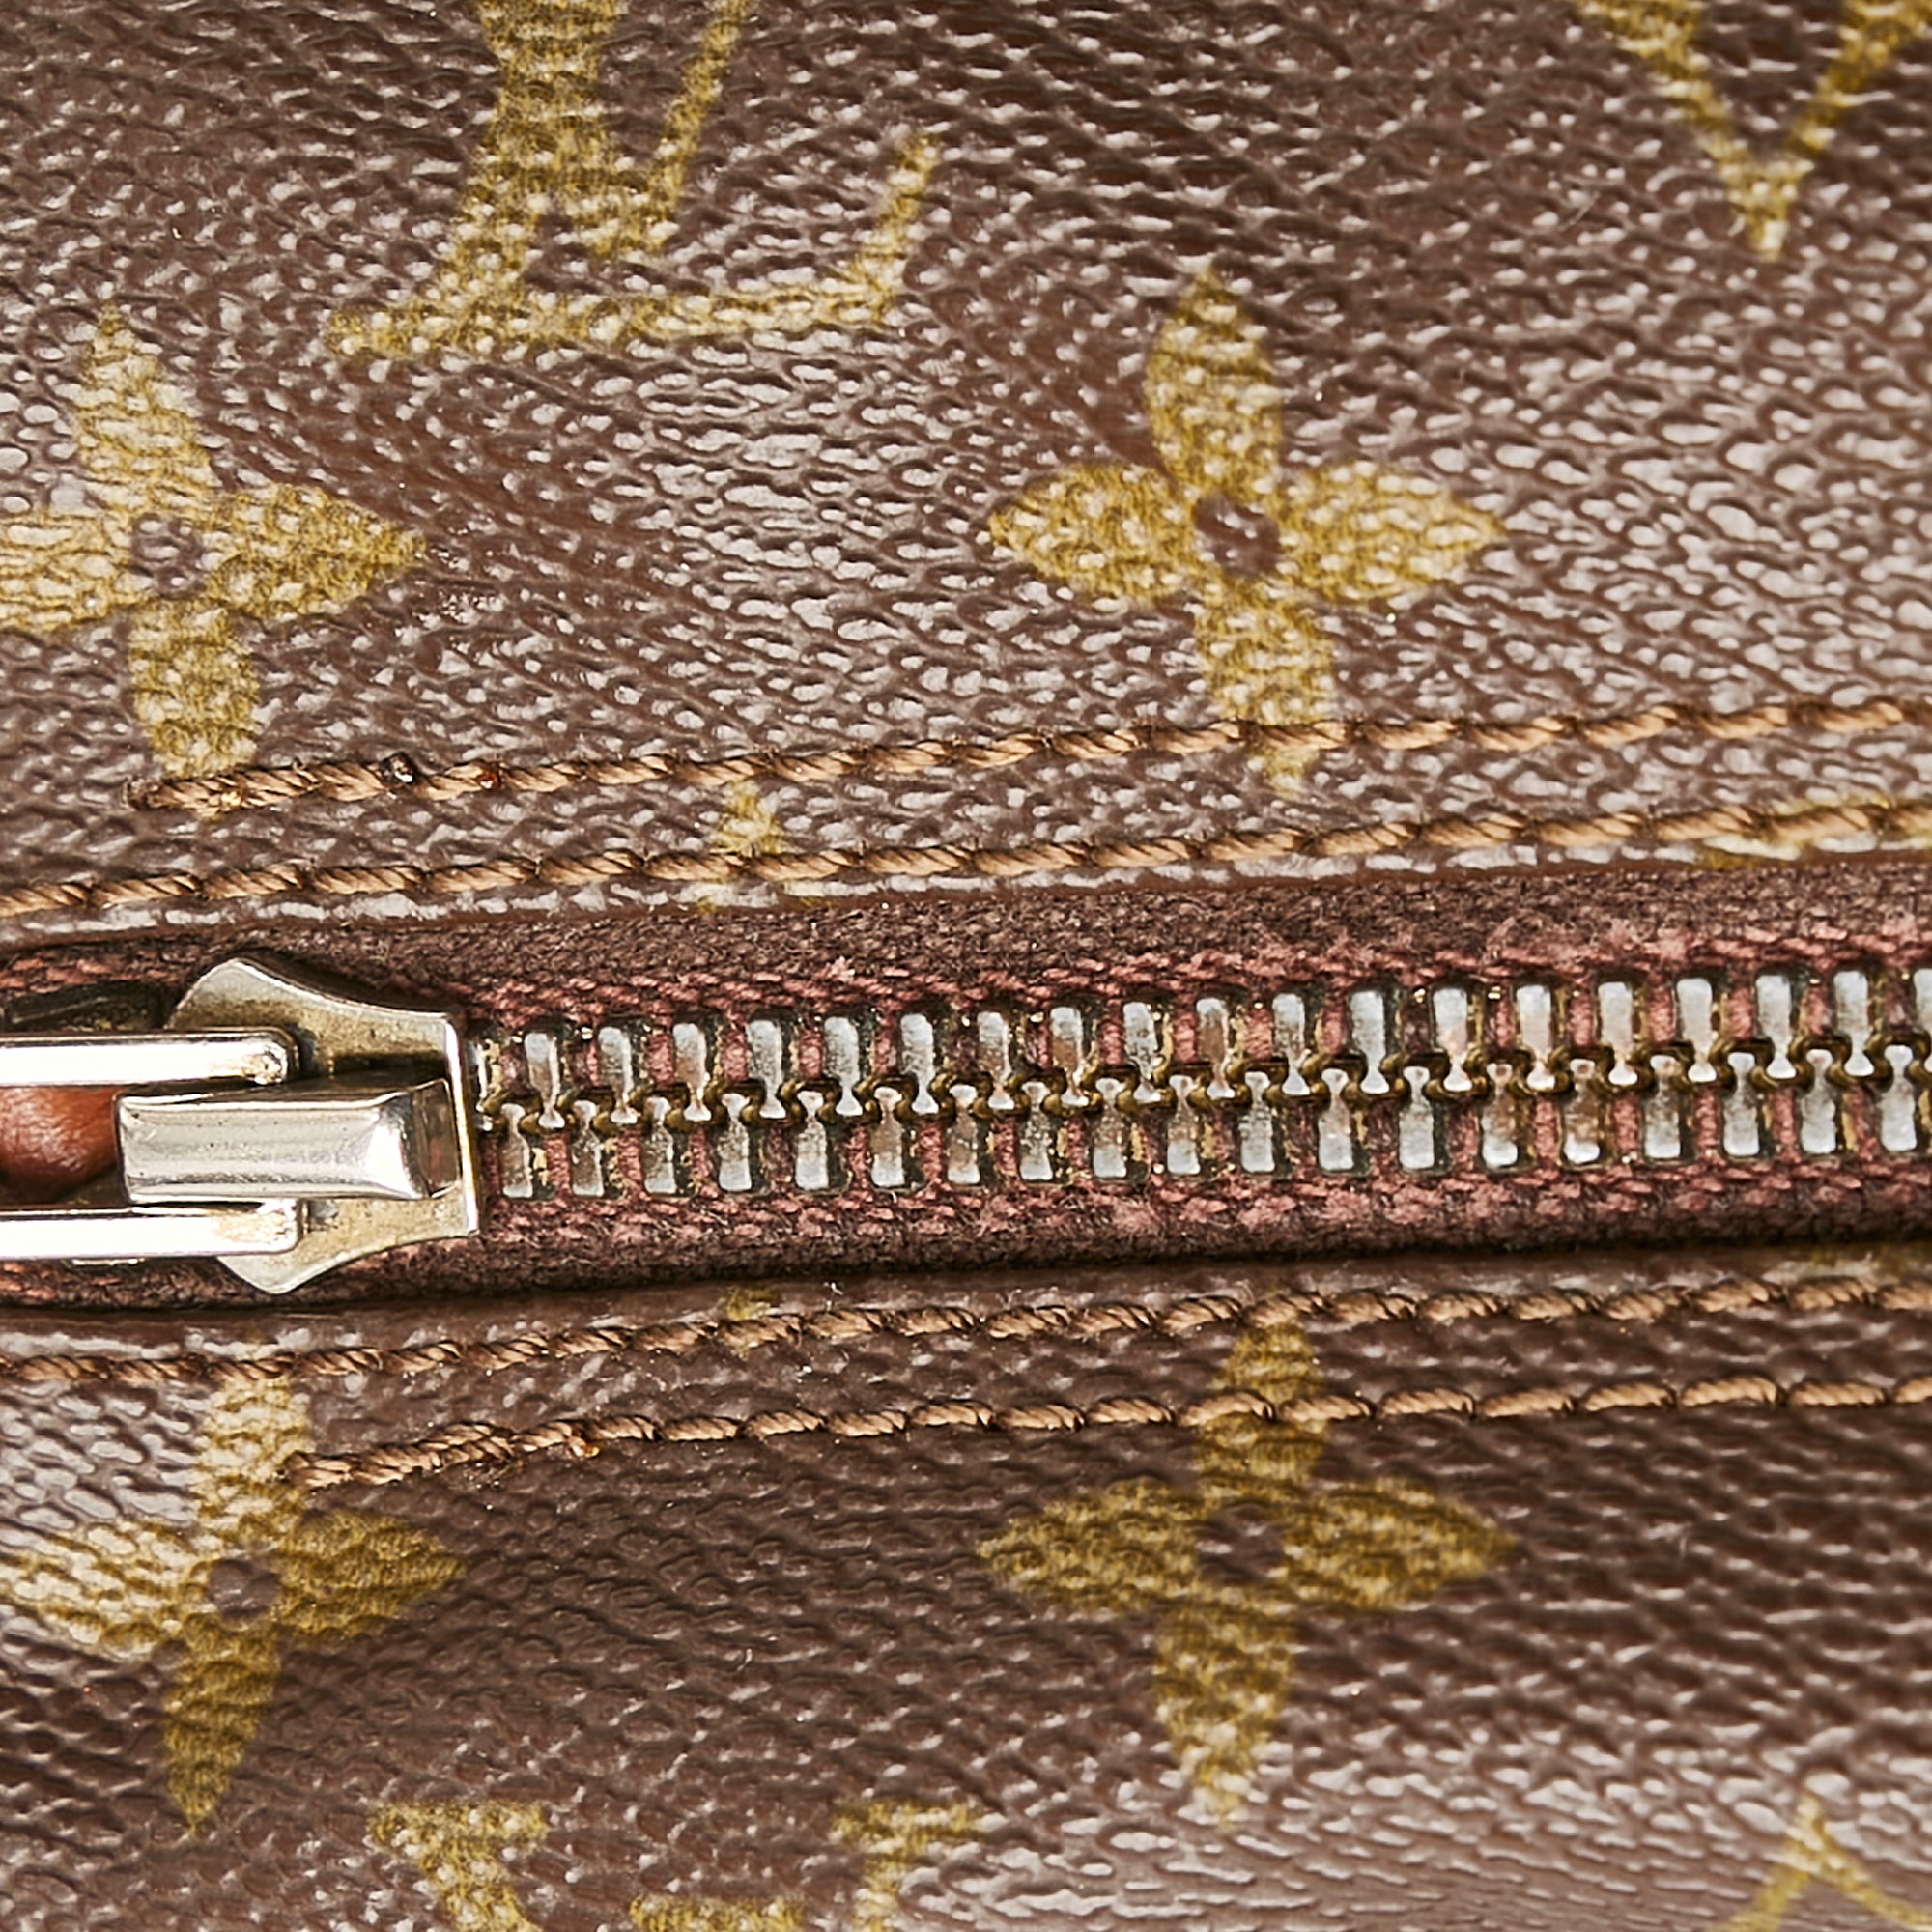 Brown Louis Vuitton Monogram Papillon 30 Handbag, RvceShops Revival